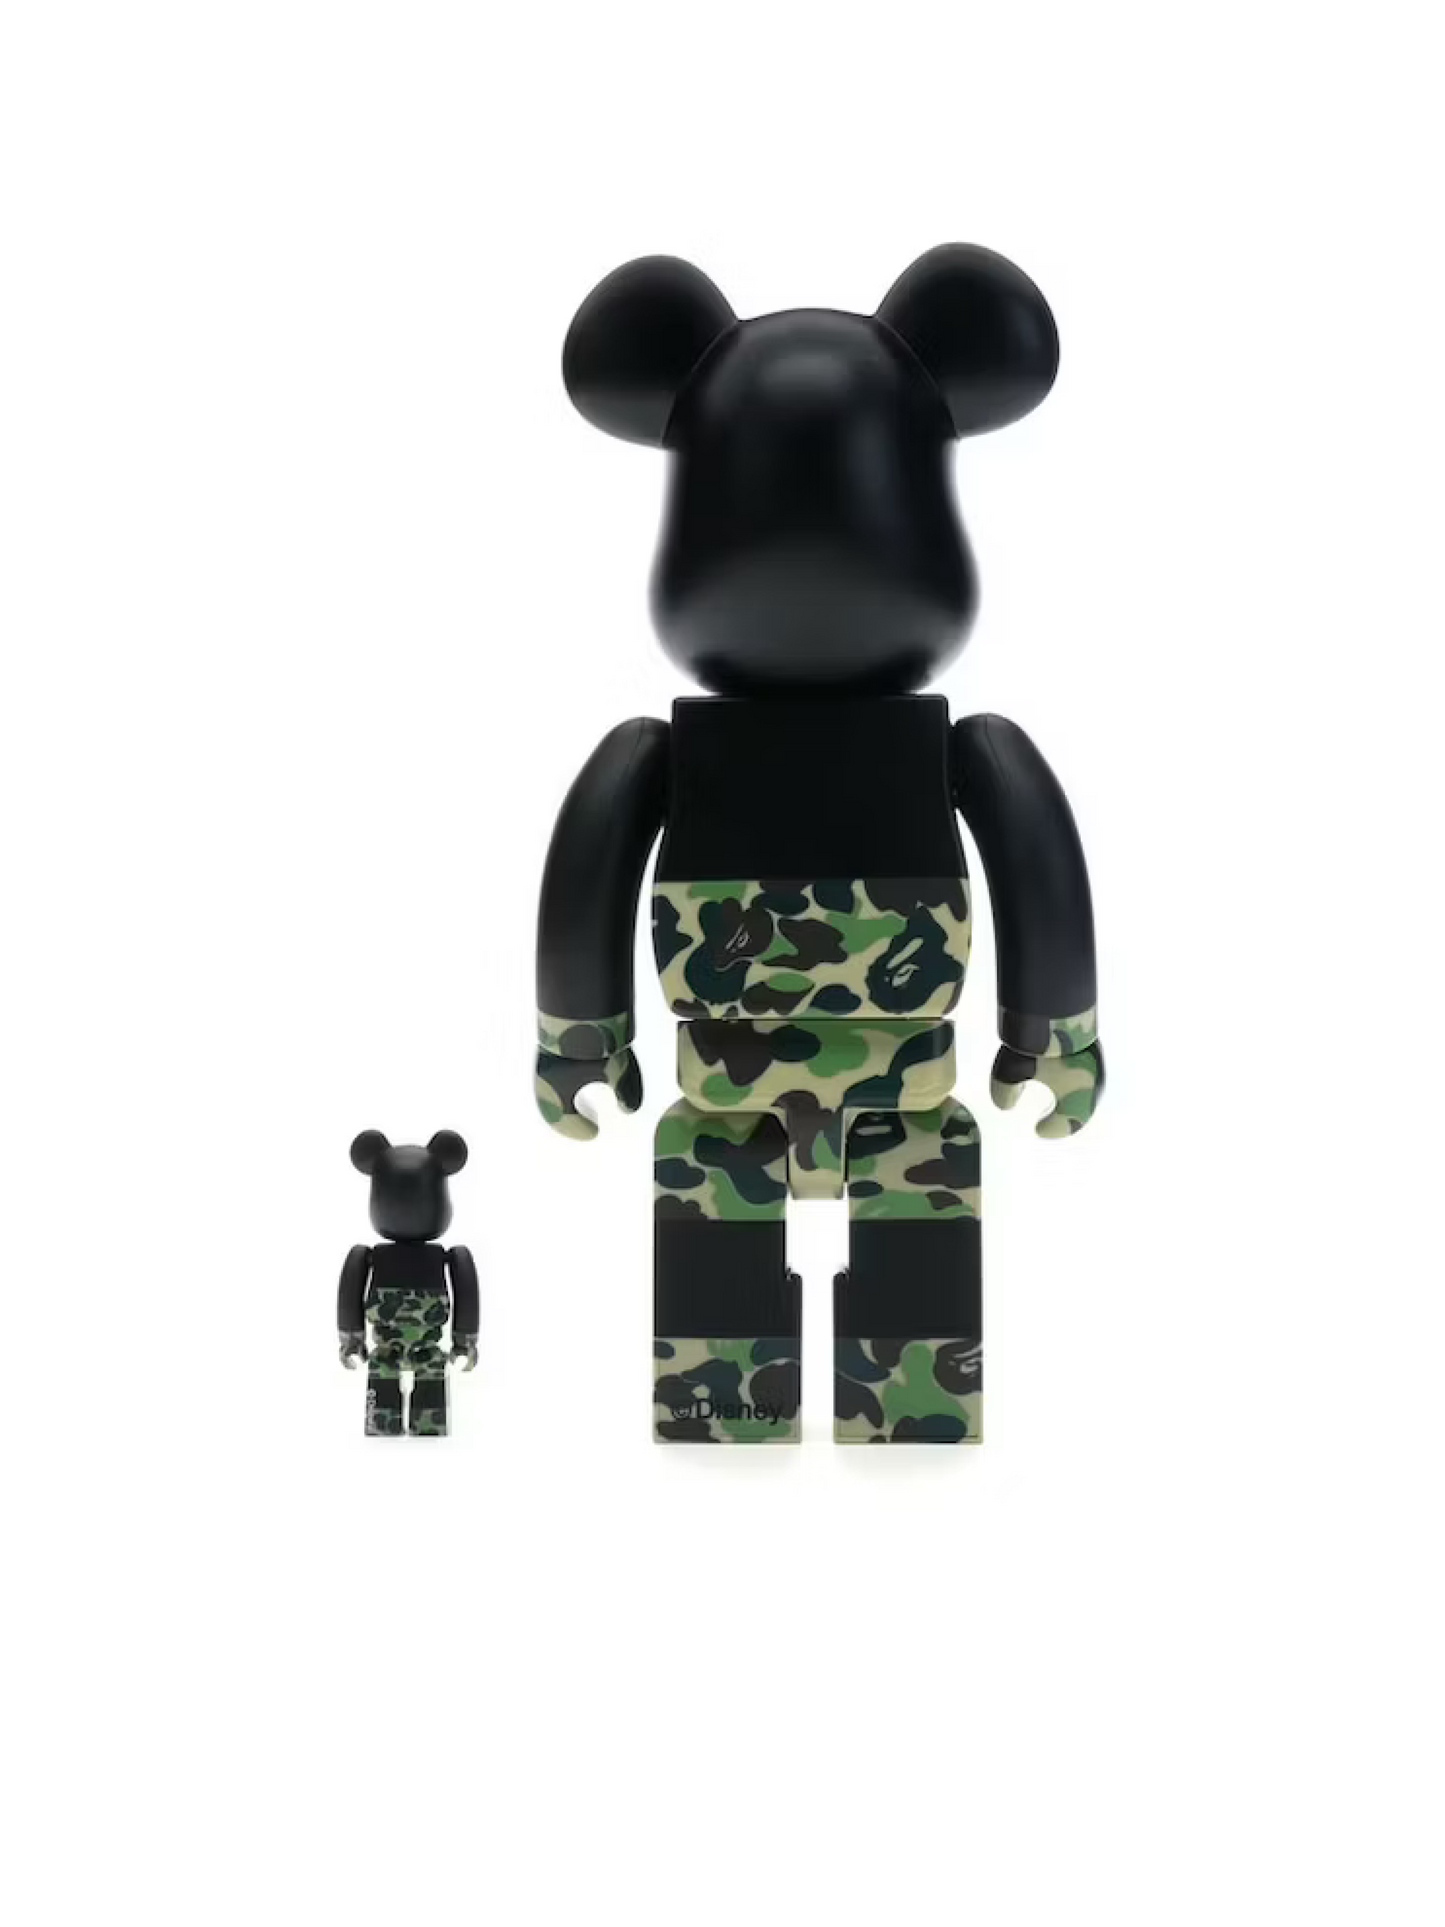 Bearbrick BAPE Mickey Mouse Black/Green Camo 100% + 400%